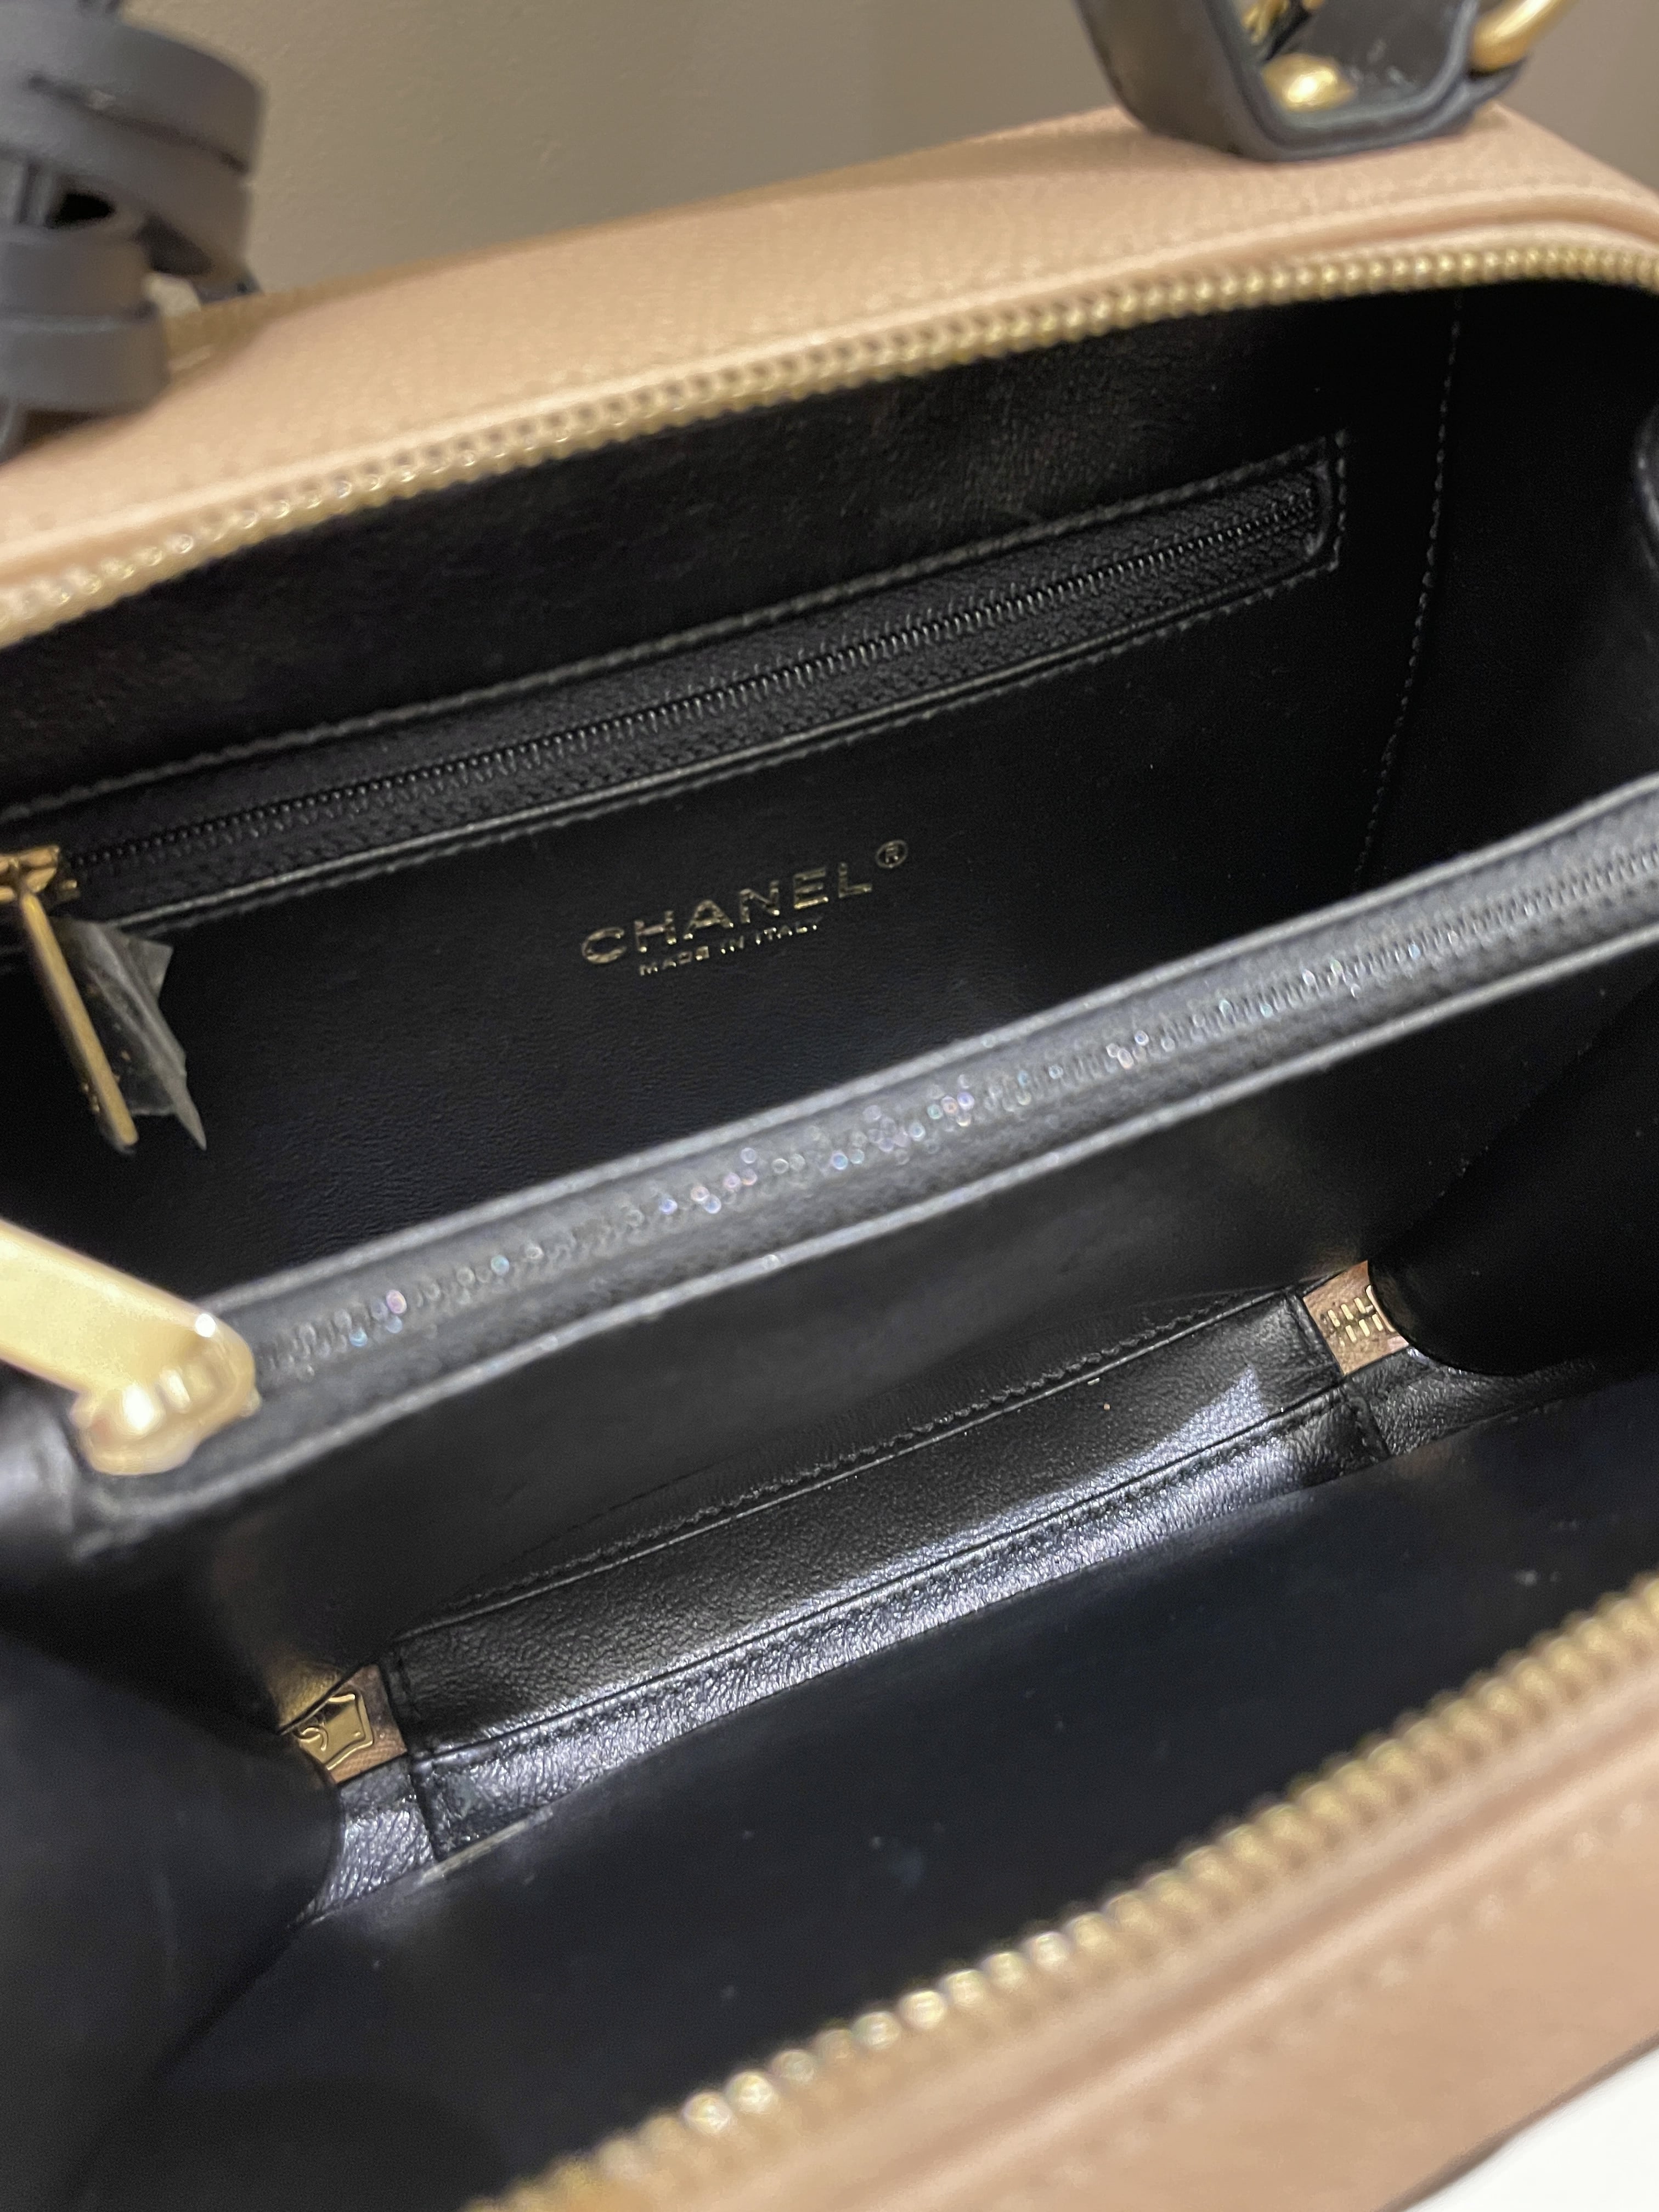 Chanel Filigree Vanity Case
Dark Beige Caviar